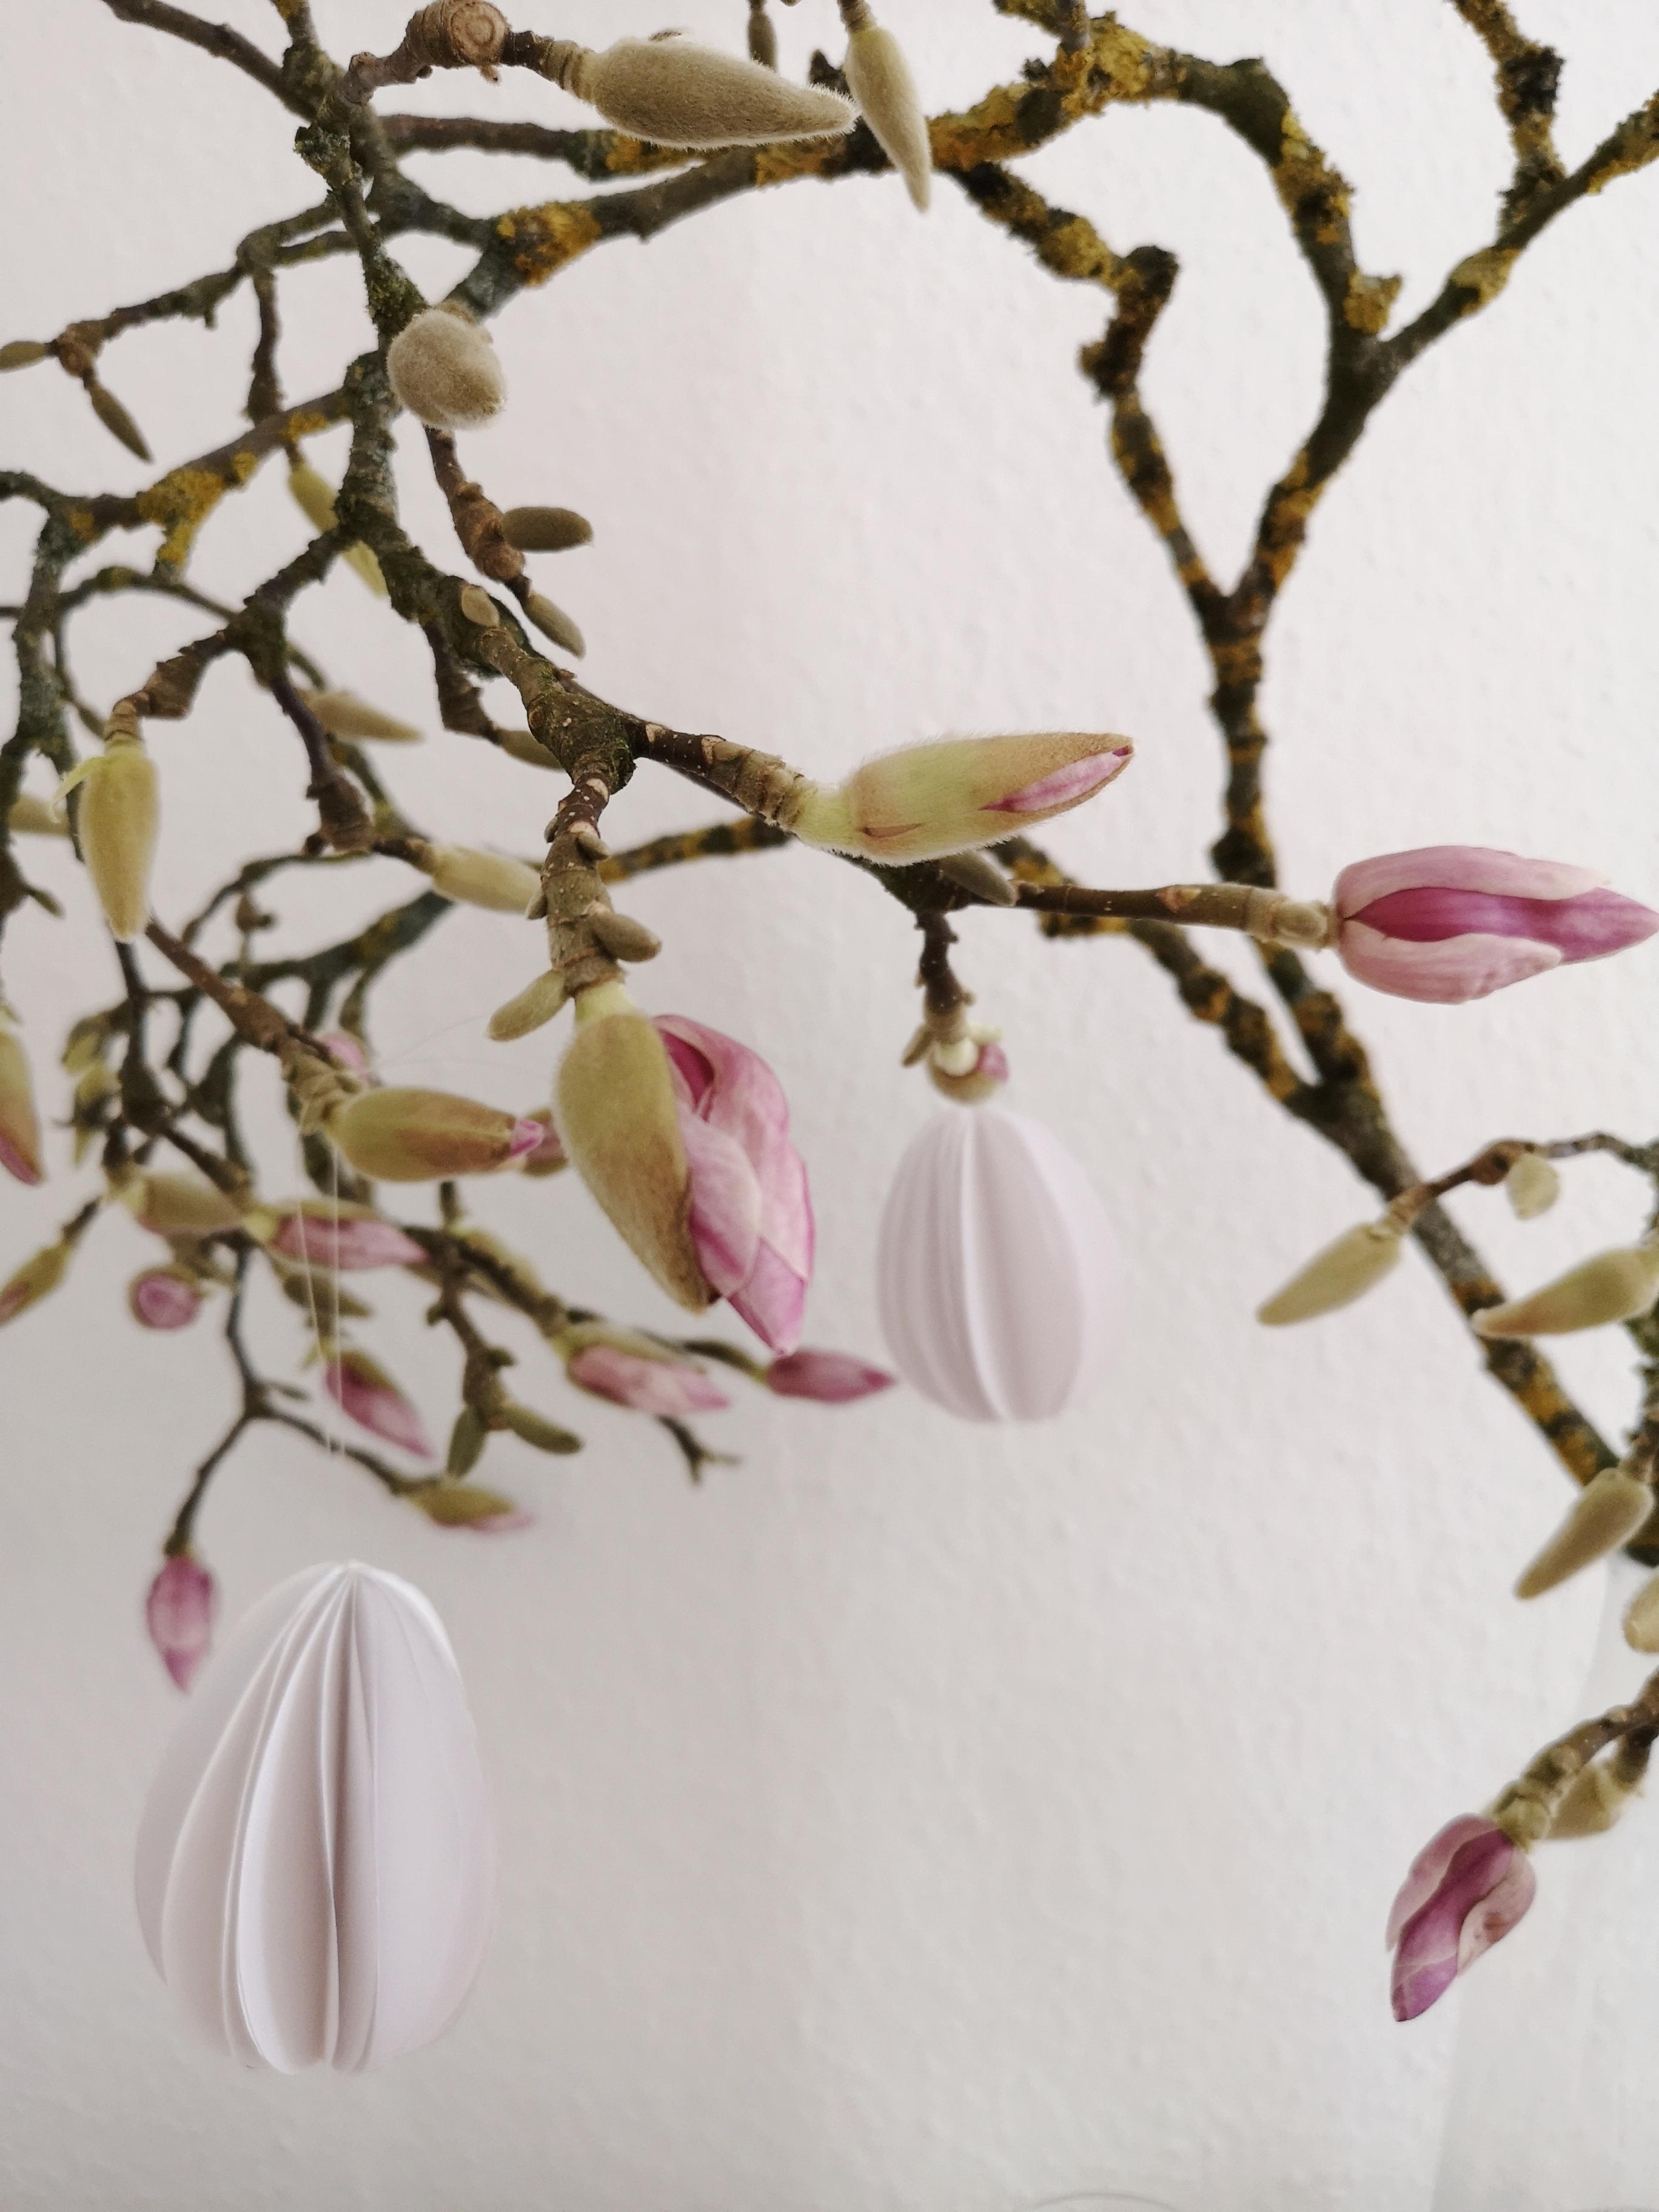 Magnolia - Liebe
#easter #ostern #magnolia #magnolie #easterdecor 